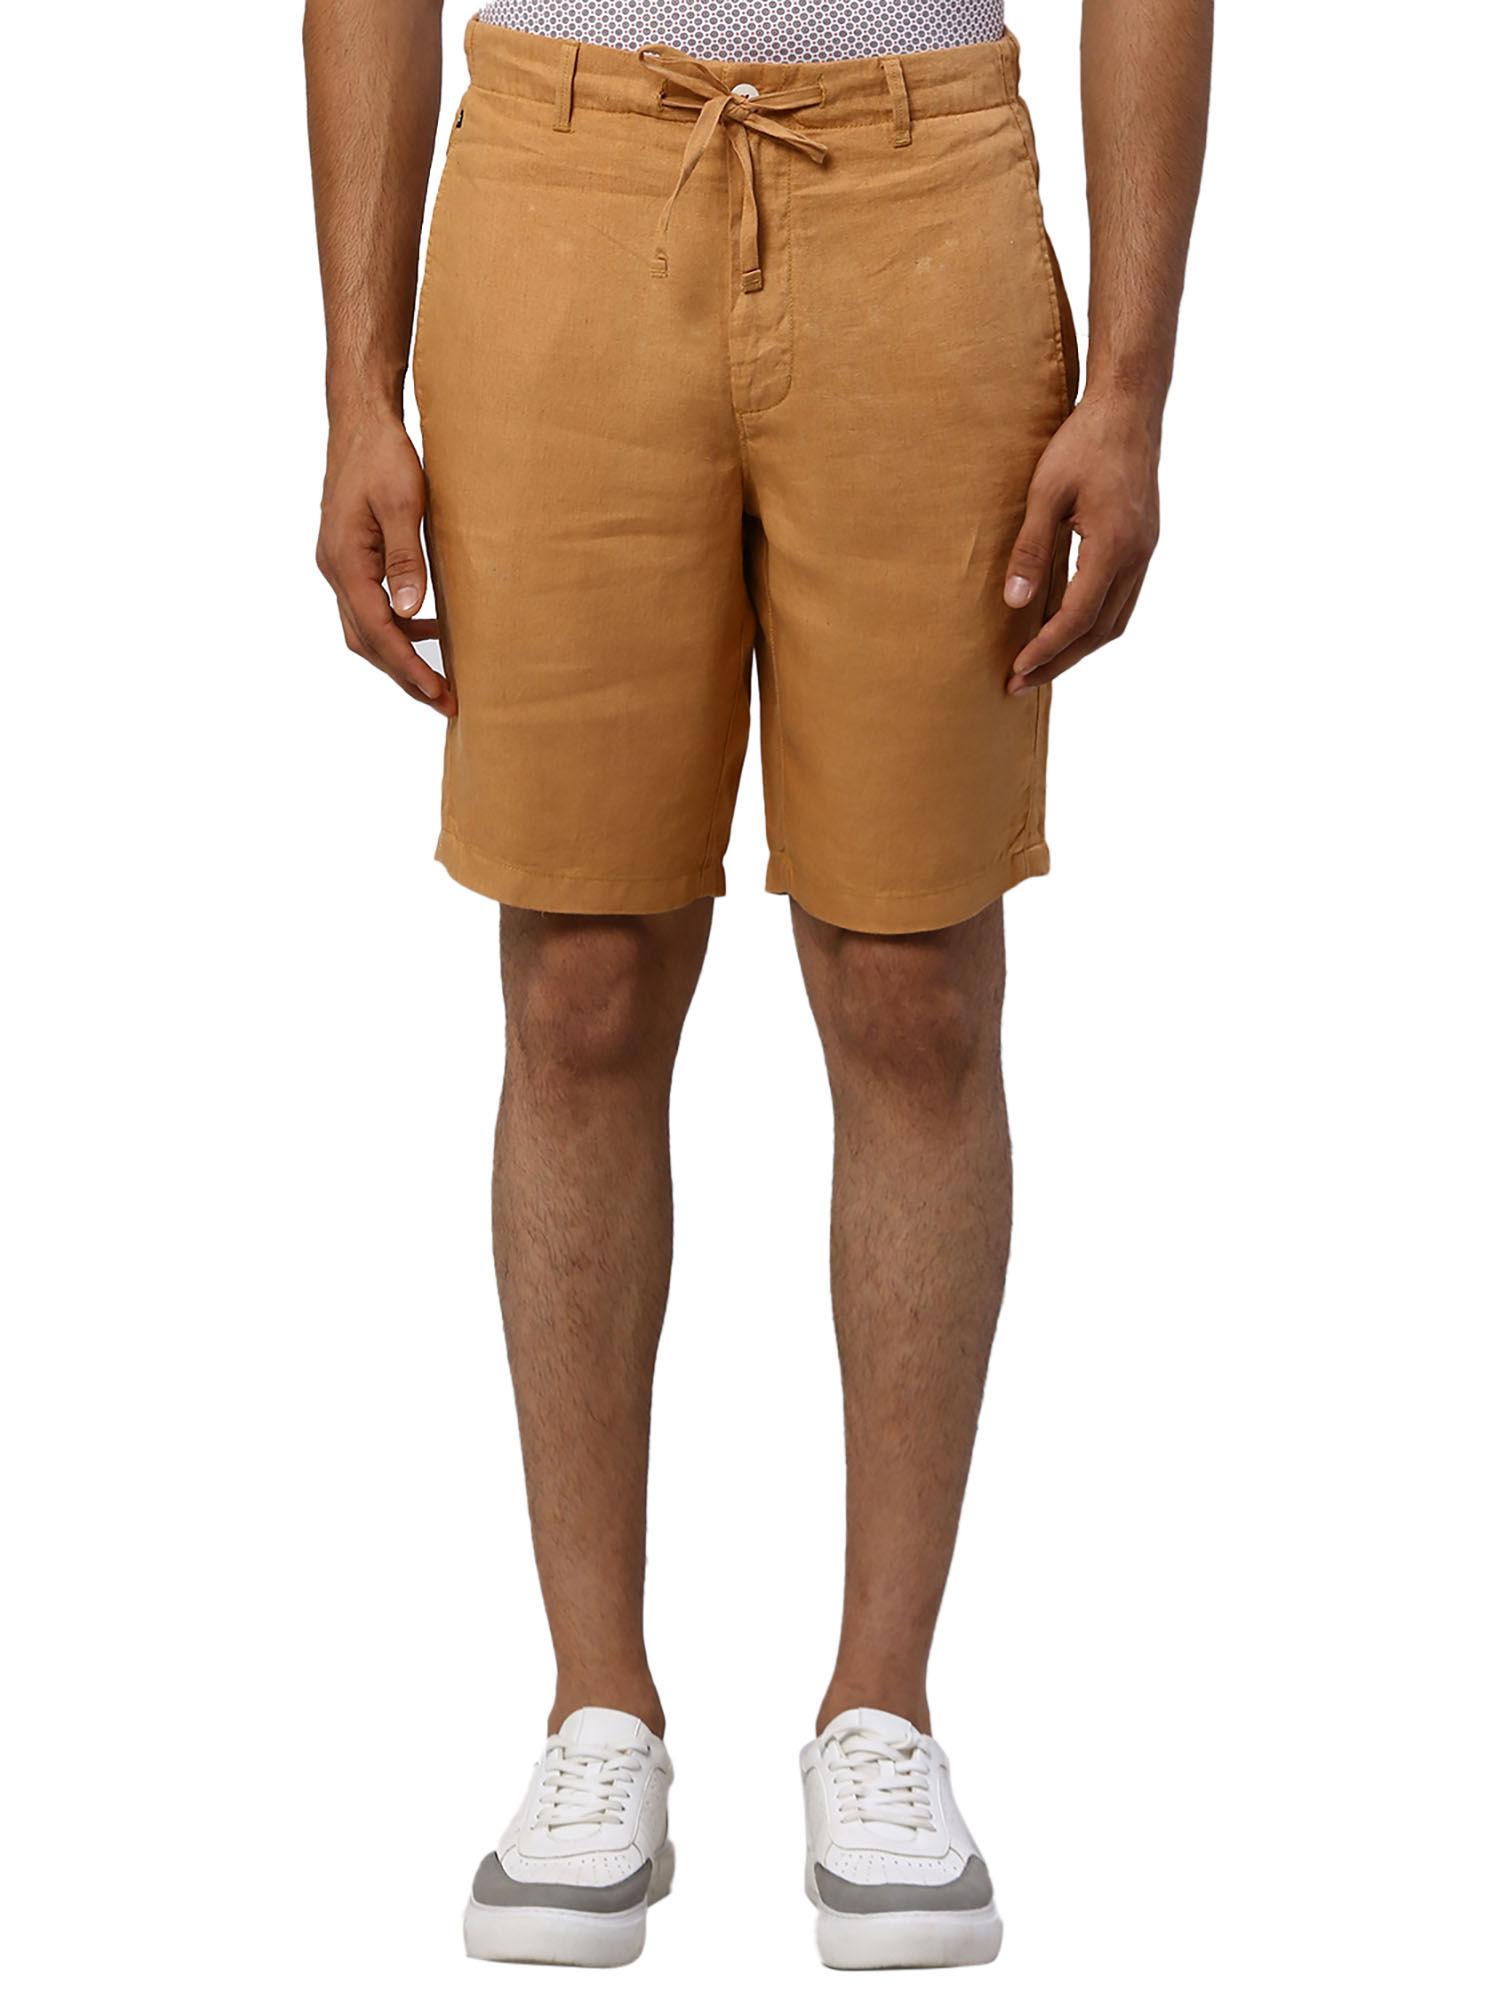 slim fit solid mustard shorts